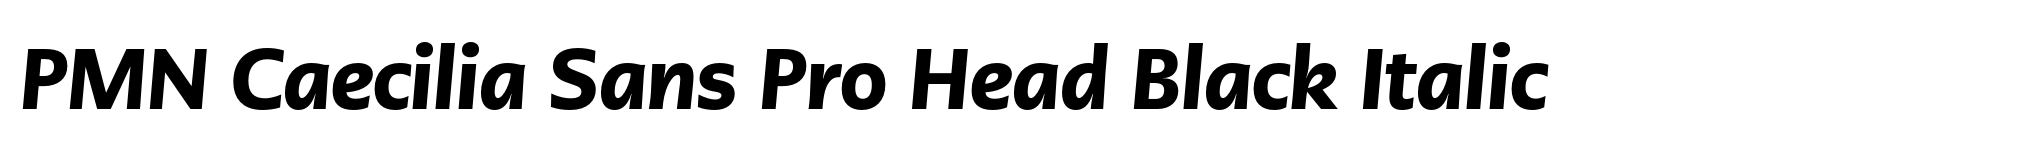 PMN Caecilia Sans Pro Head Black Italic image